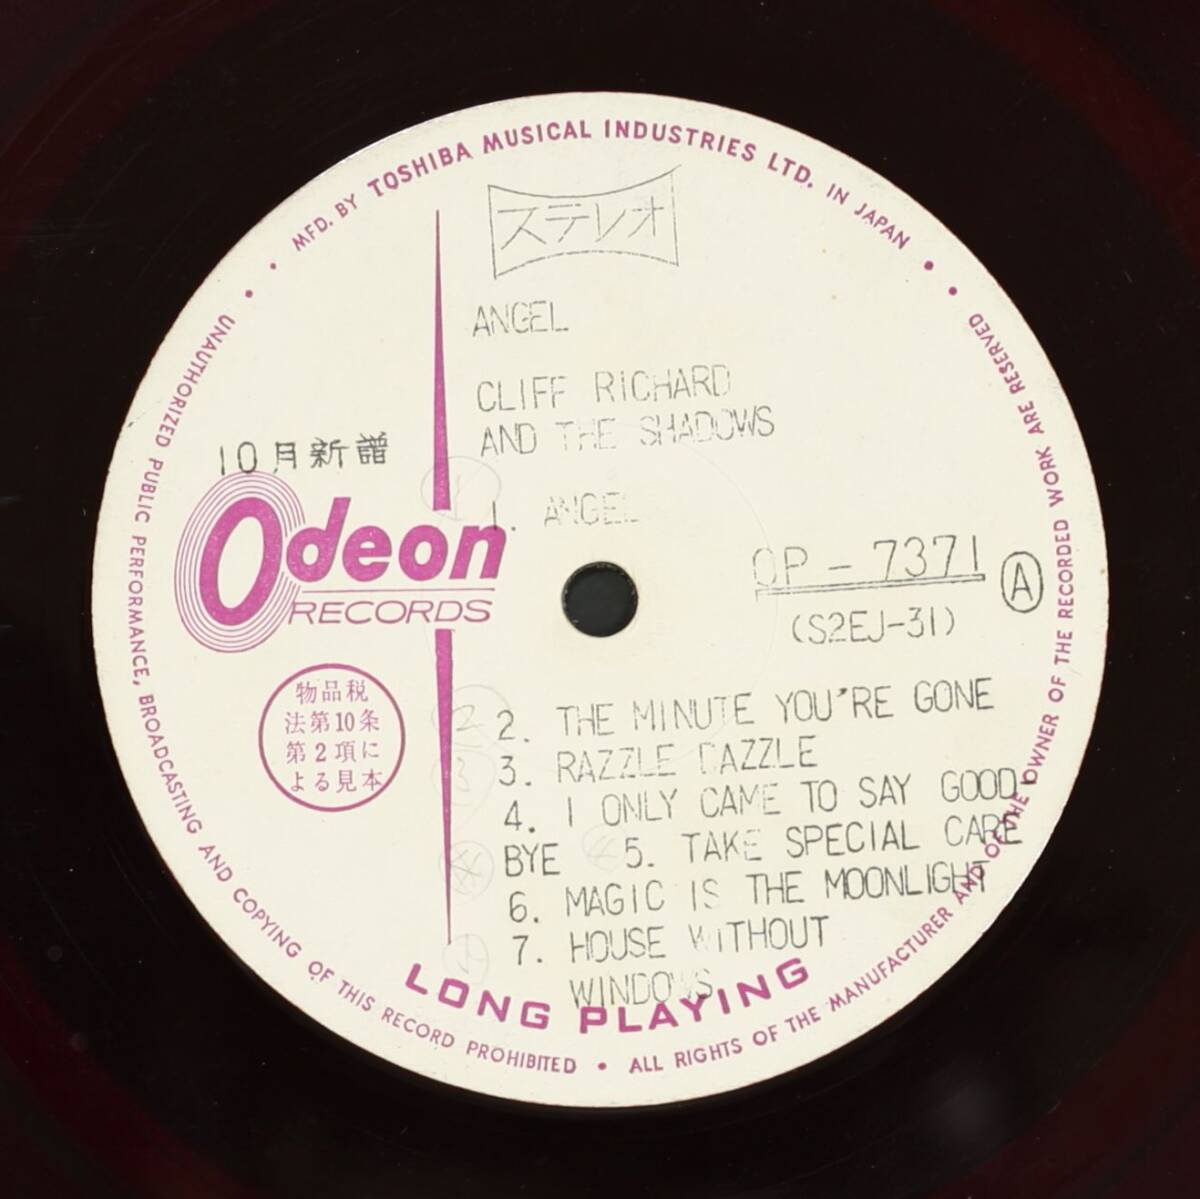 【Promo,LP】クリフ・リチャード/ぼくのエンジェル(並品,赤盤,OP-7371,1965,Cliff Richard,Japan Only)_画像1